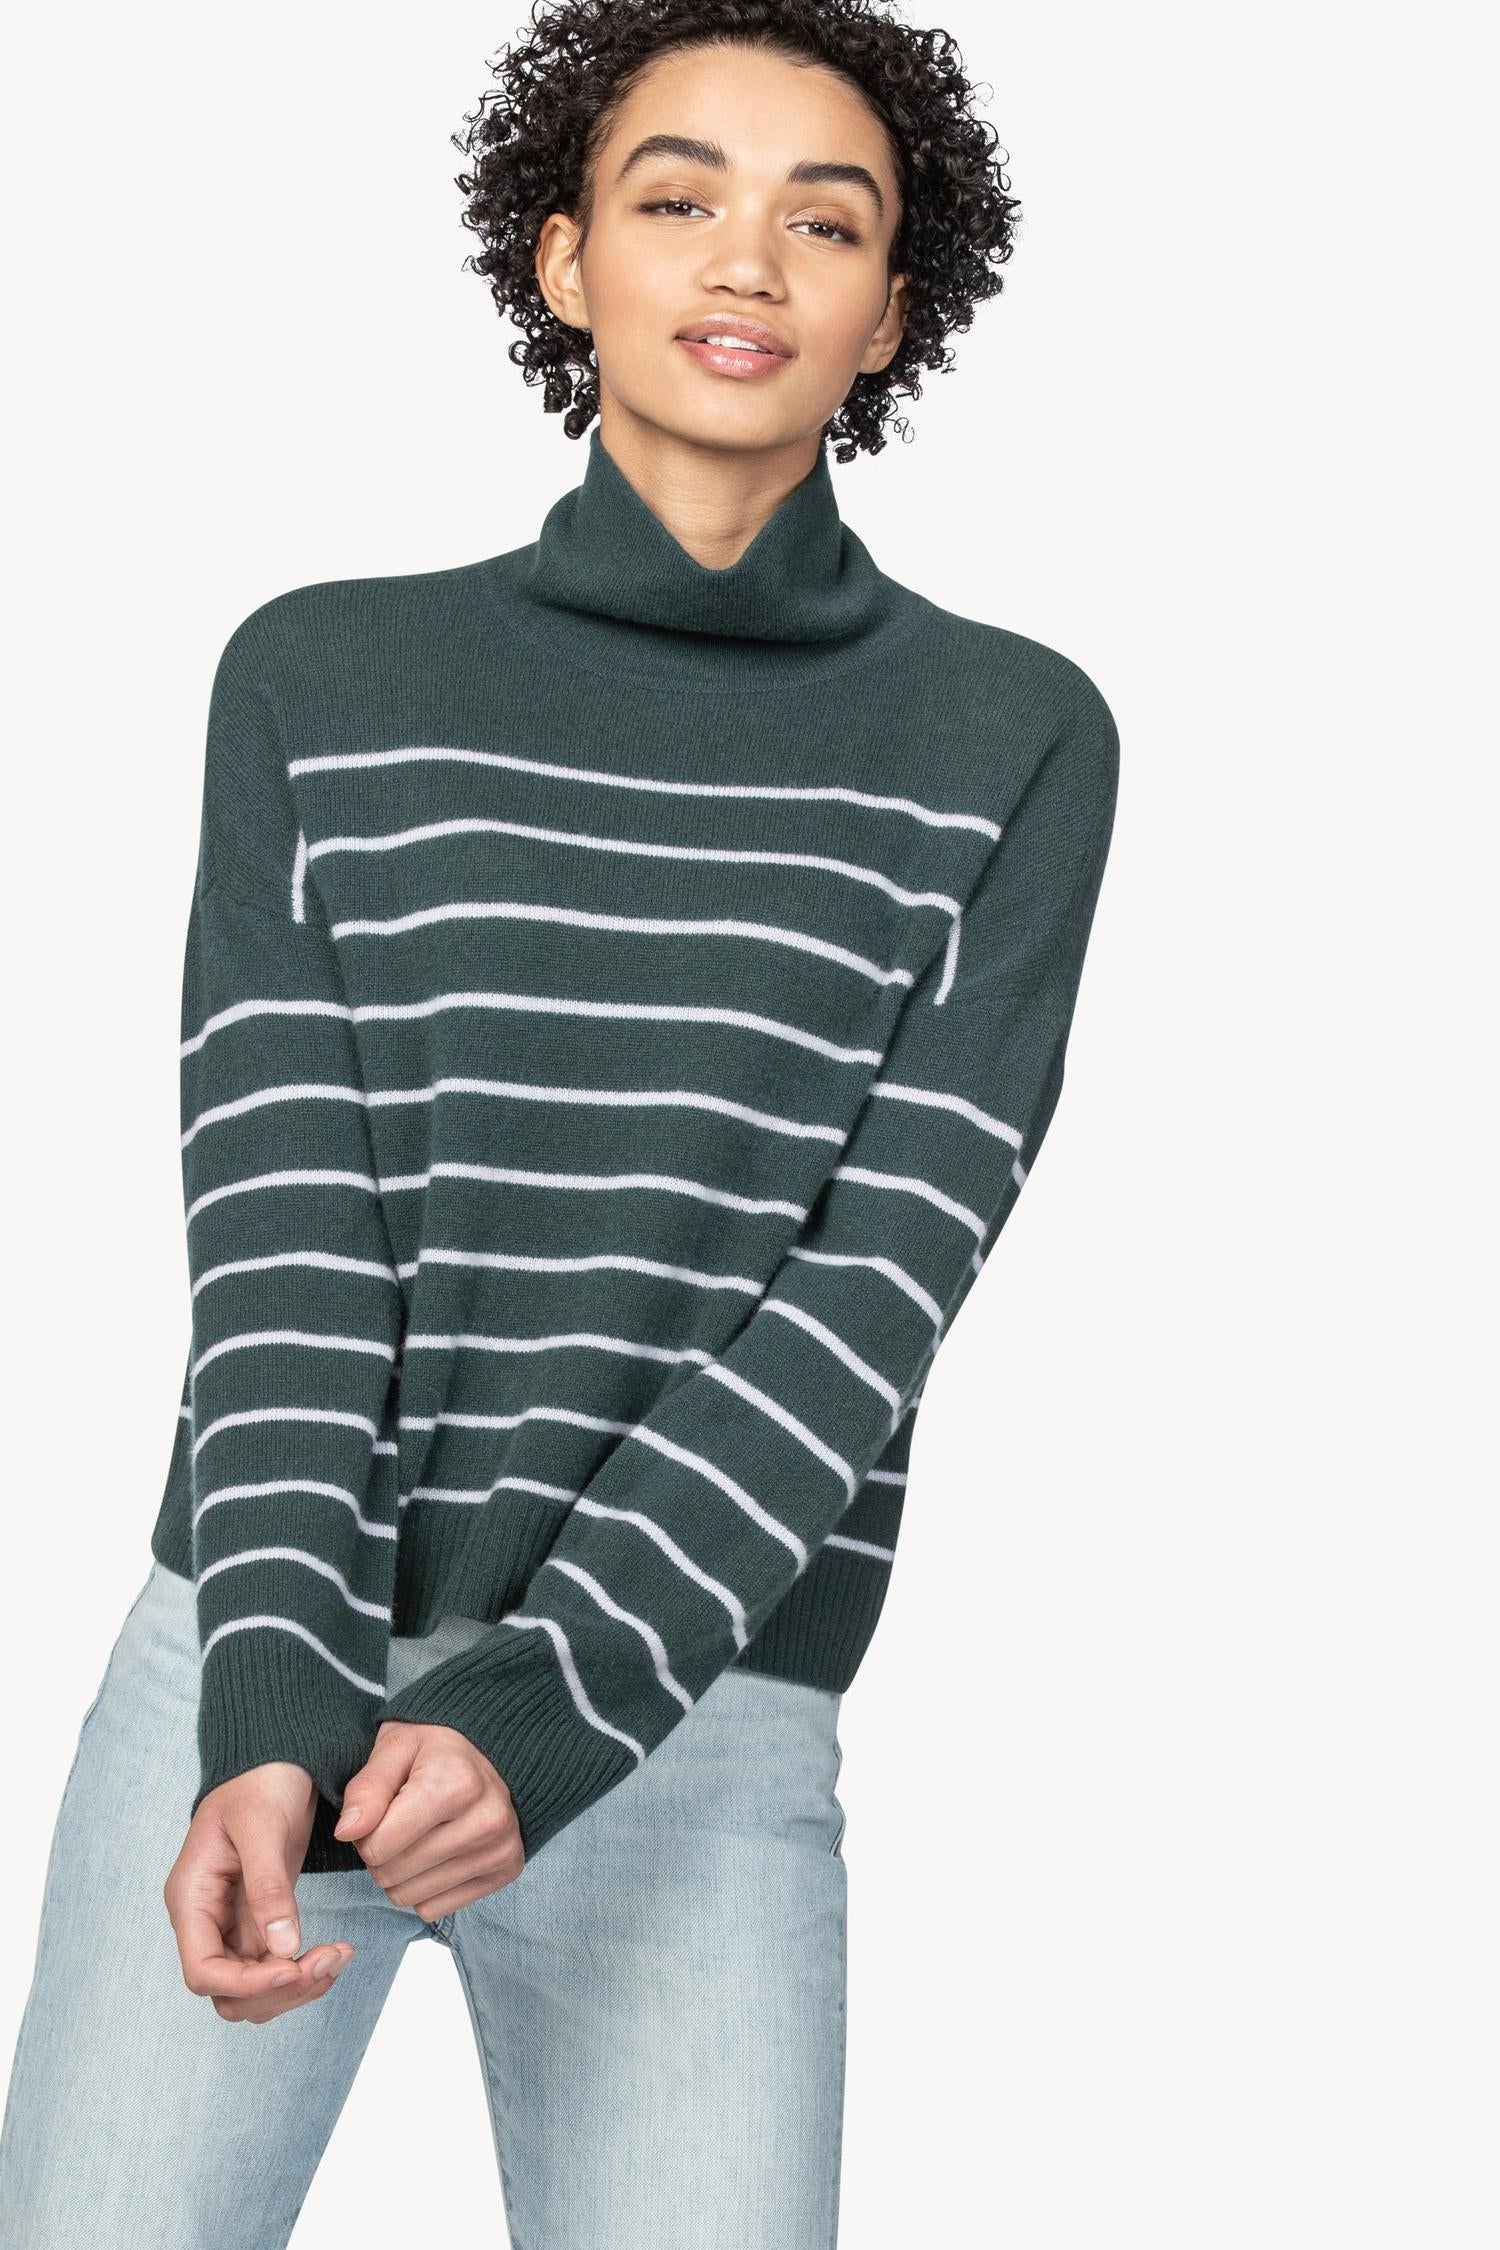 Easy Striped Turtleneck Cashmere Sweater in Evergreen Stripe